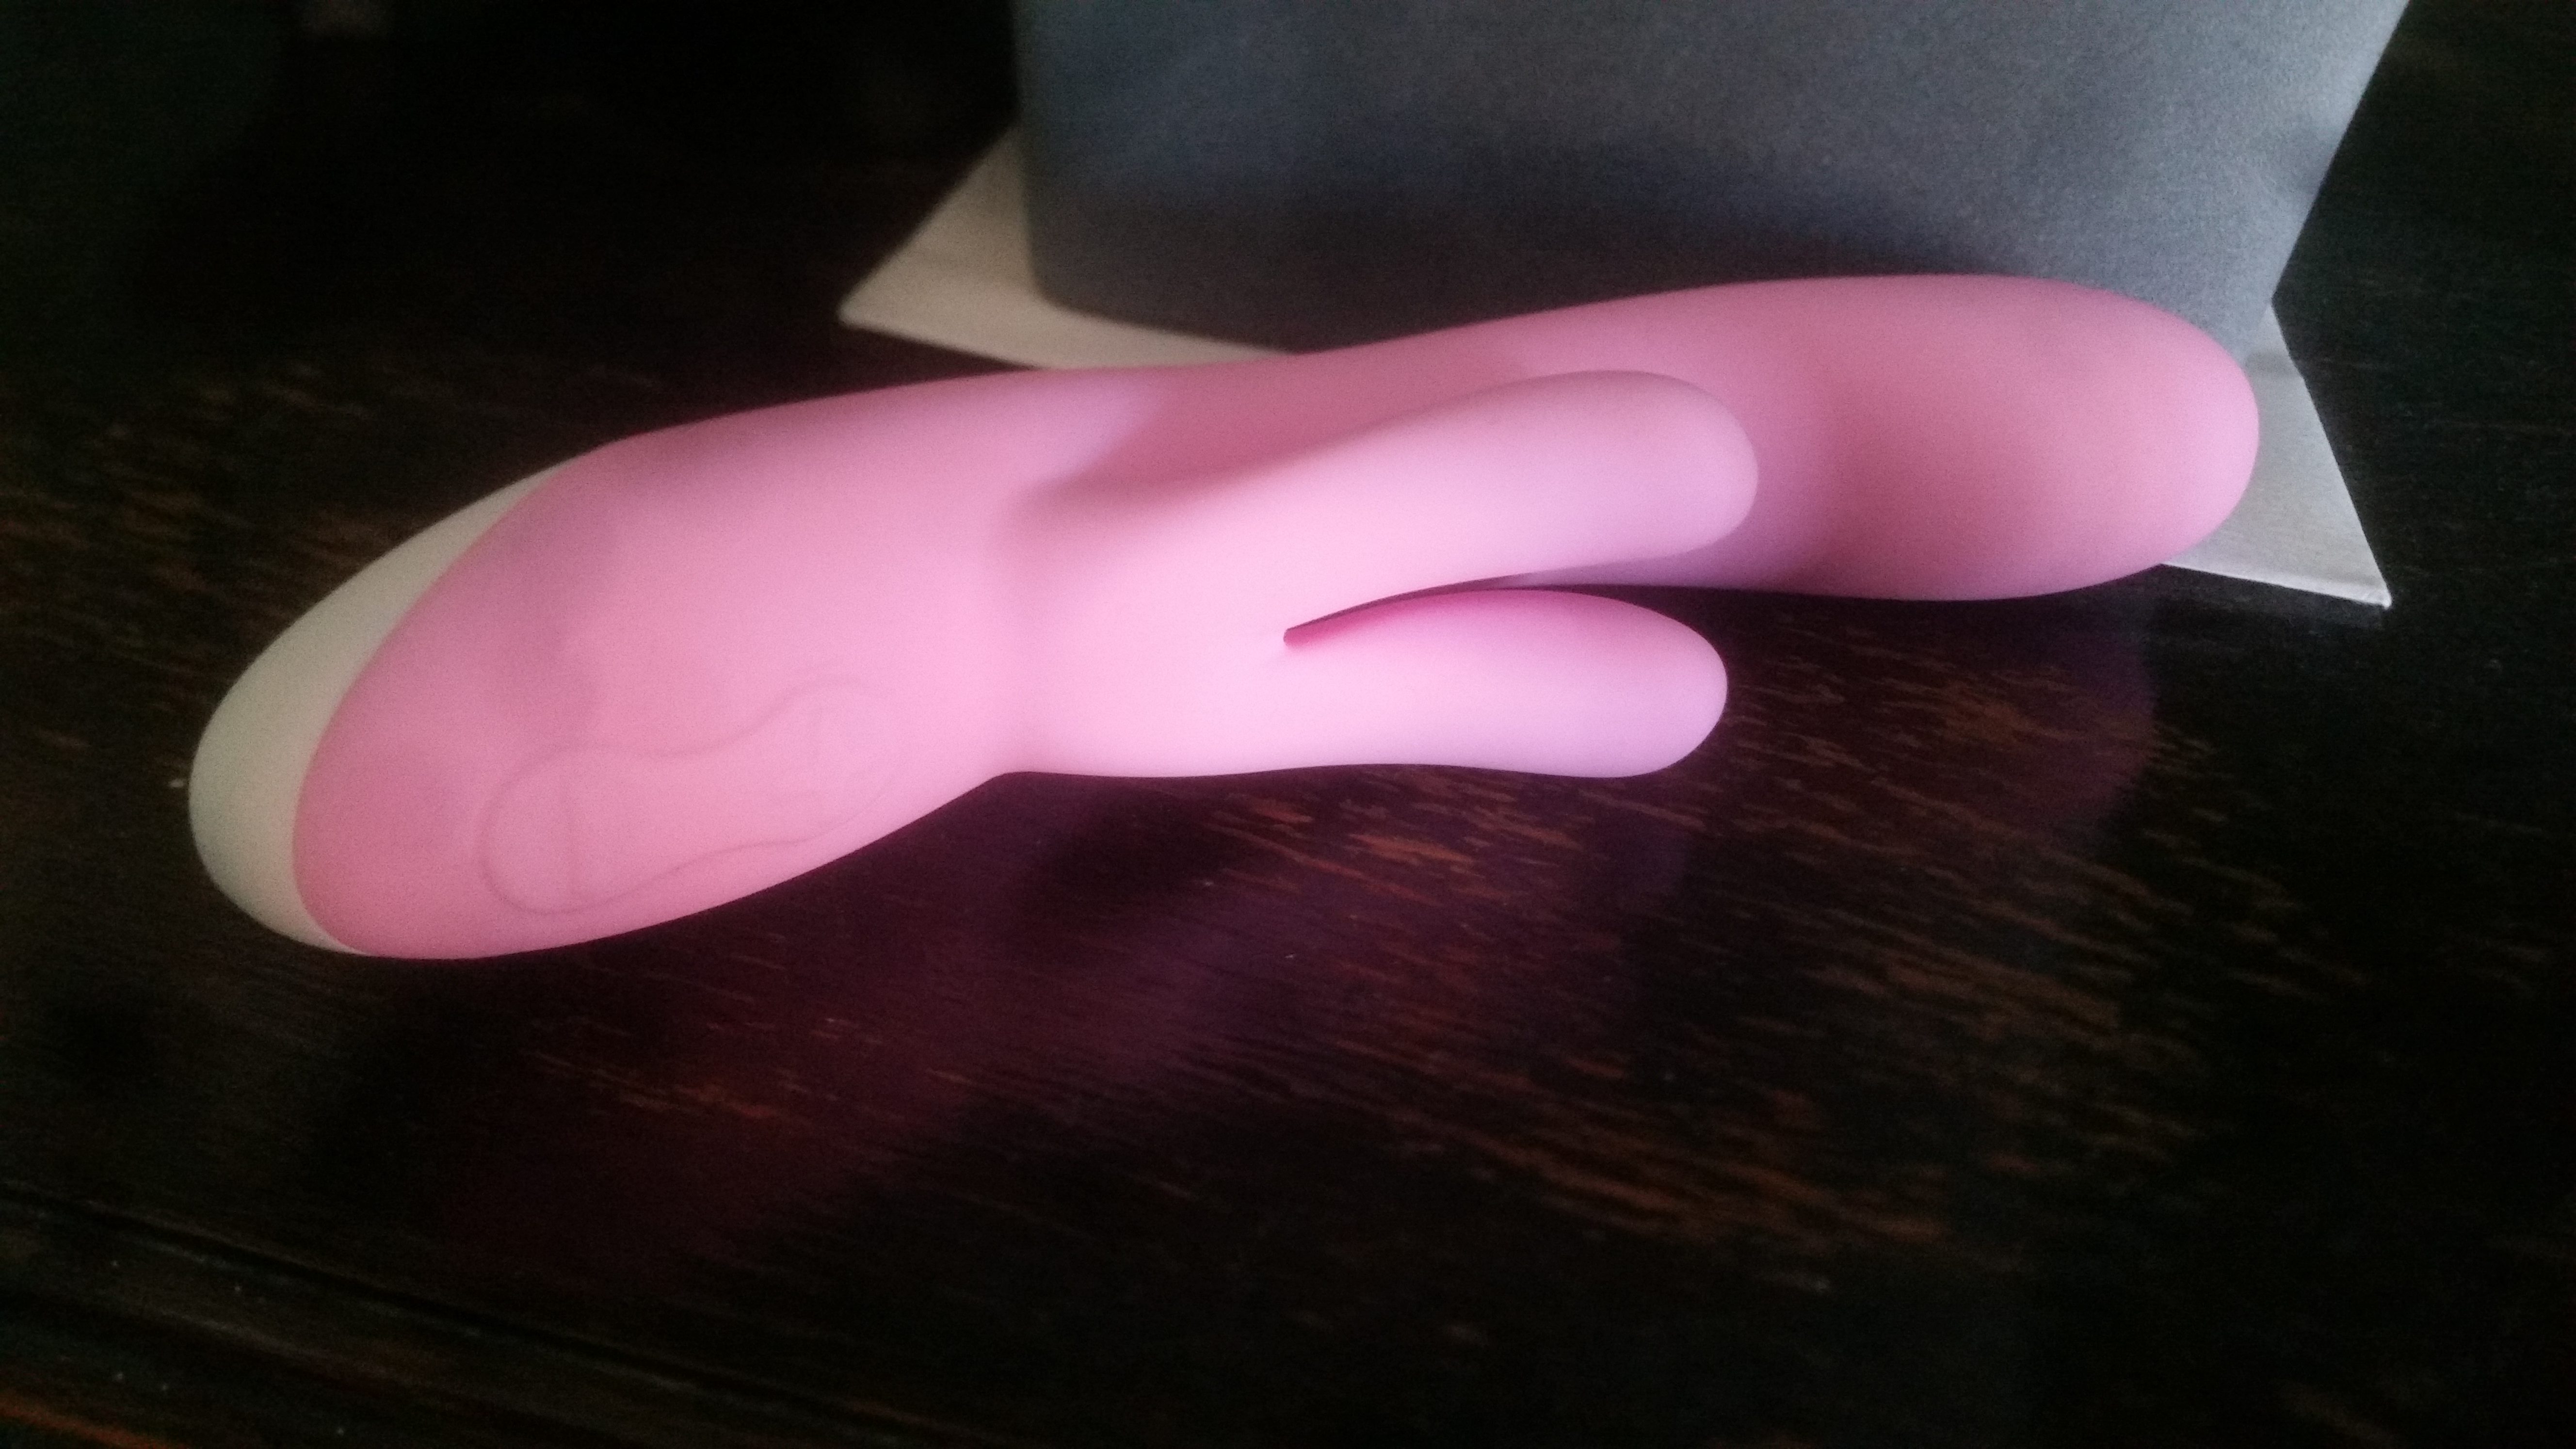 A pink rabbit vibrator lying on a dark wood surface.